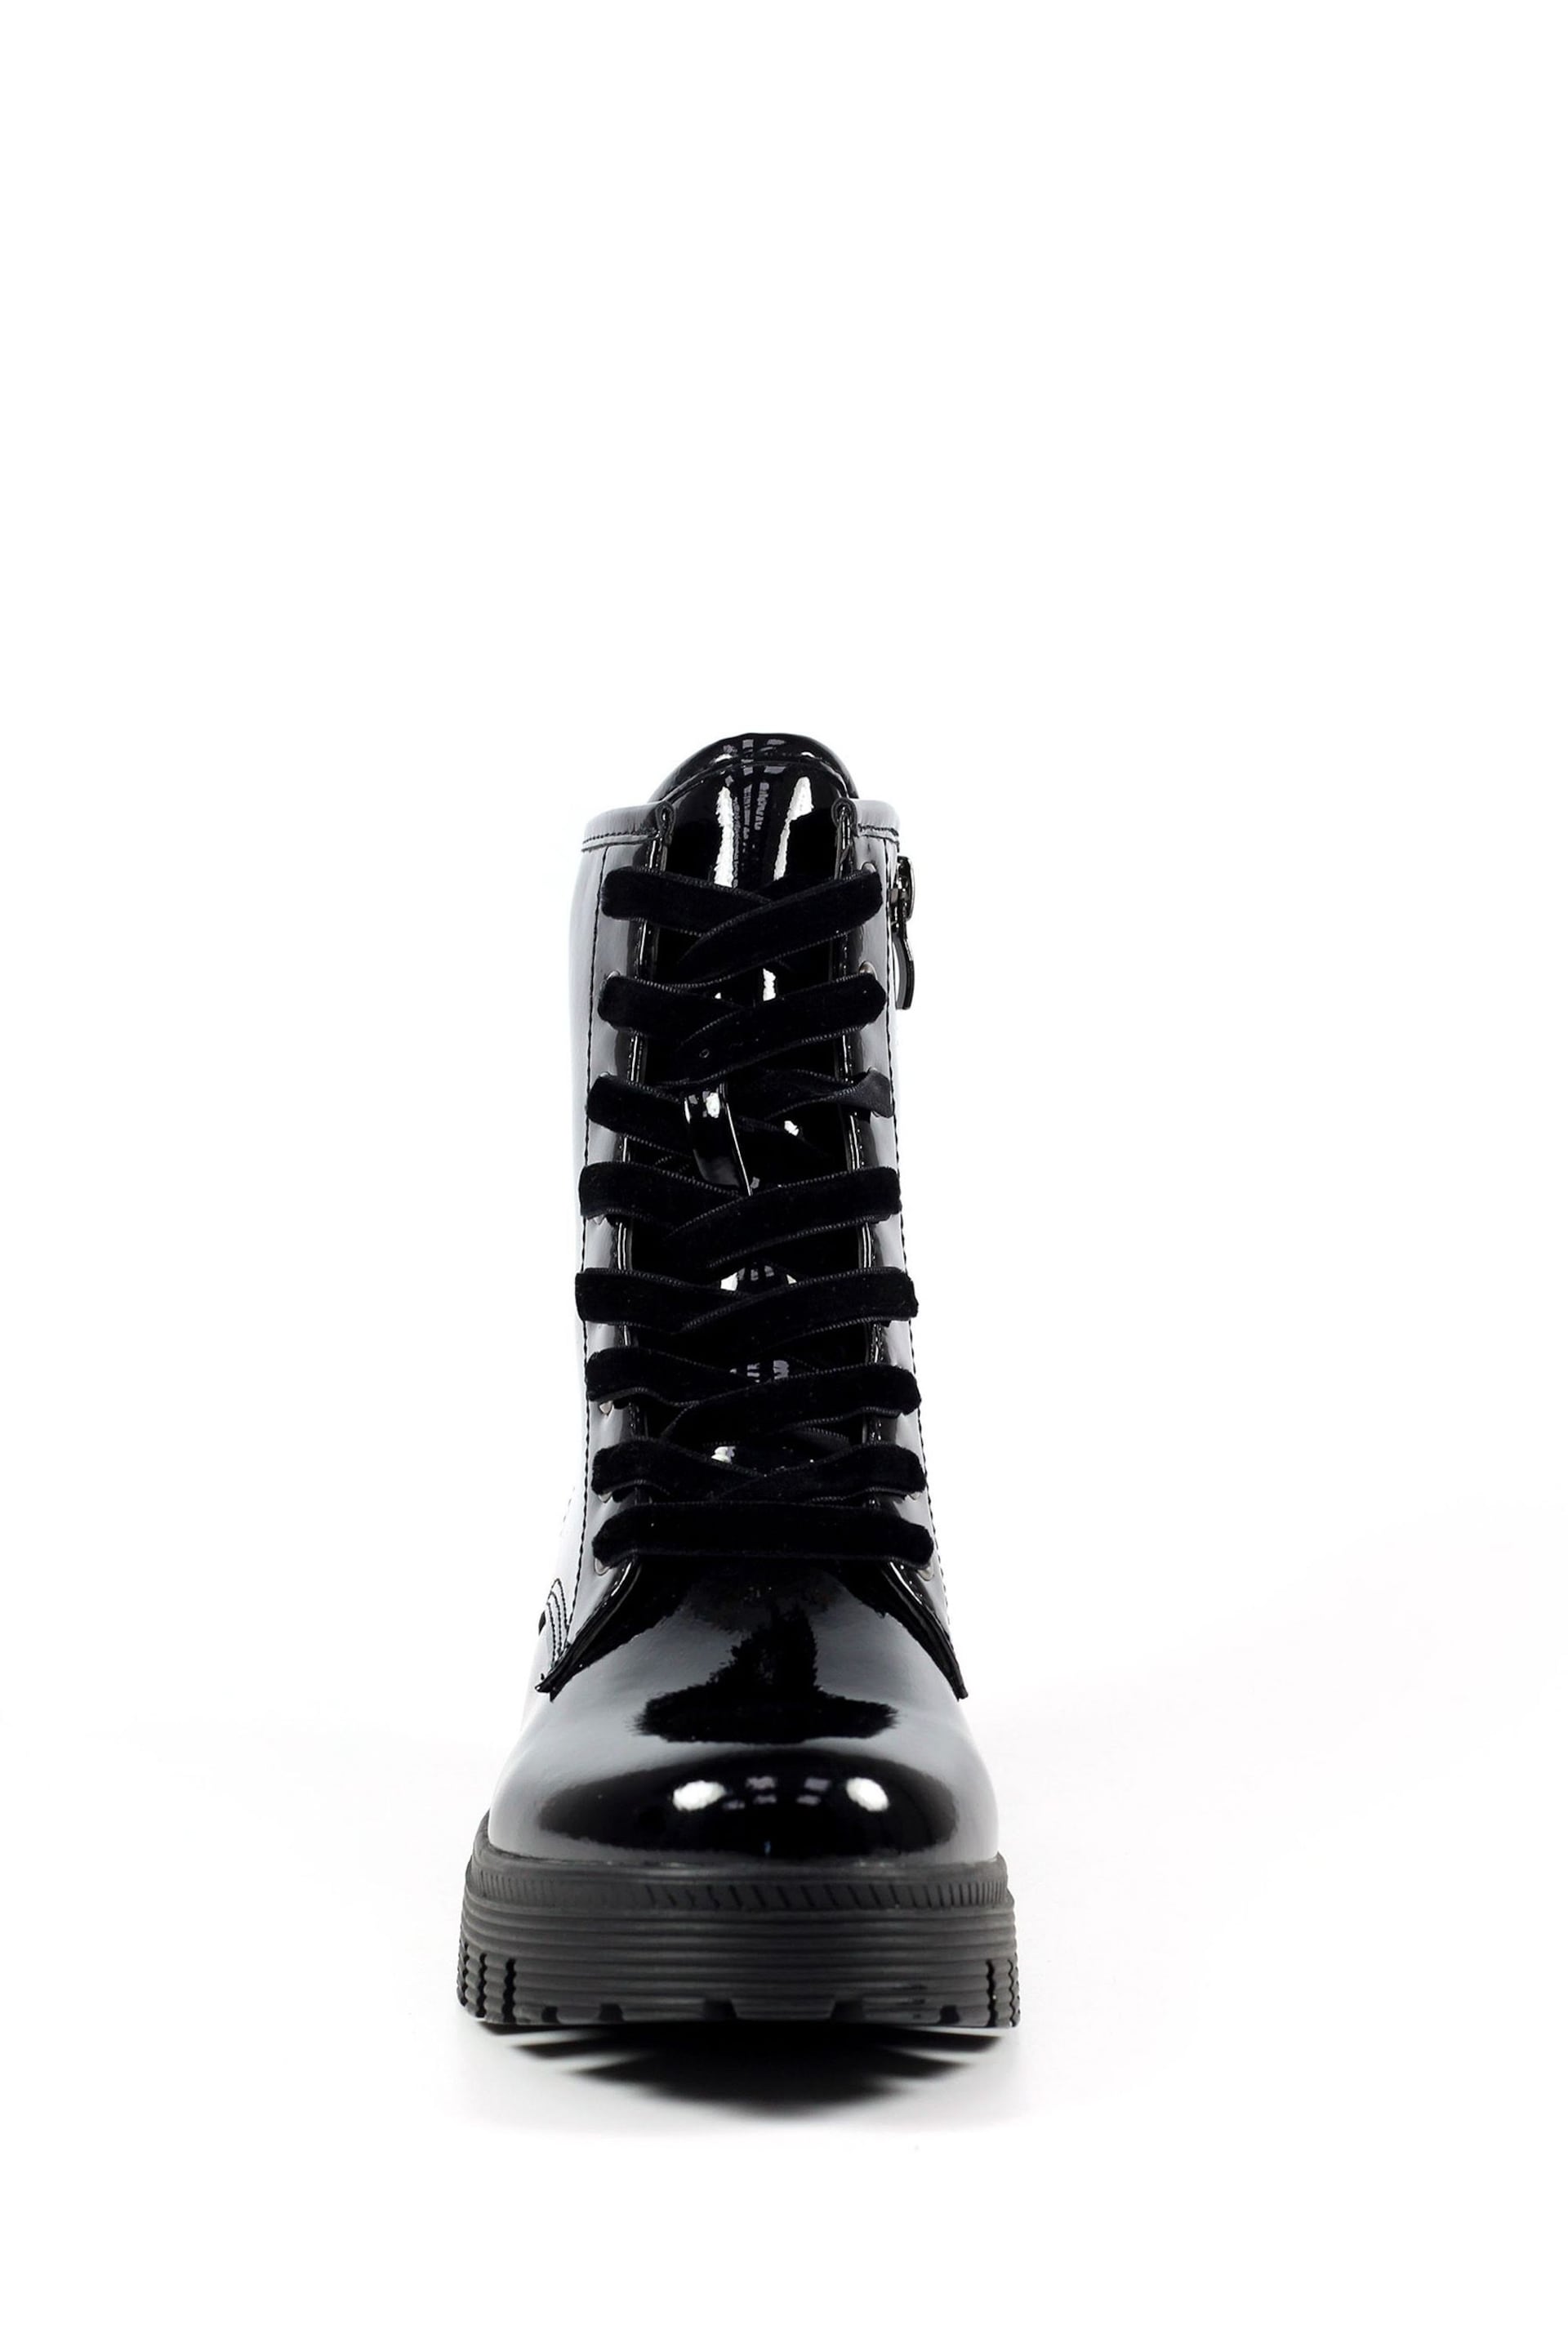 Lunar Danni Patent Black Ankle Boots - Image 3 of 8